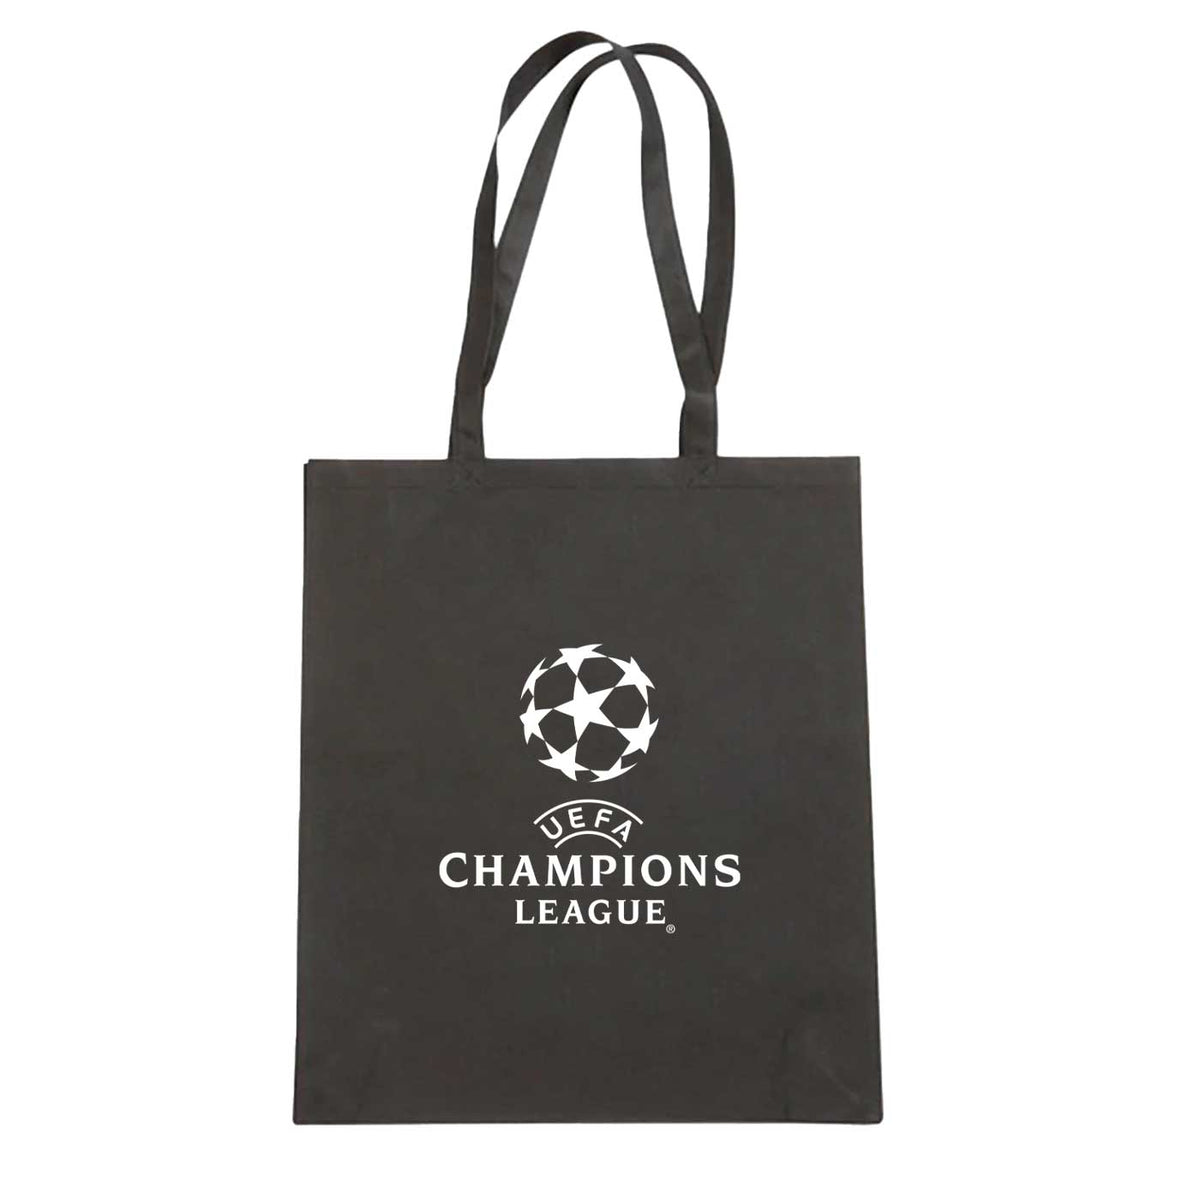 Champions League Tote Bag